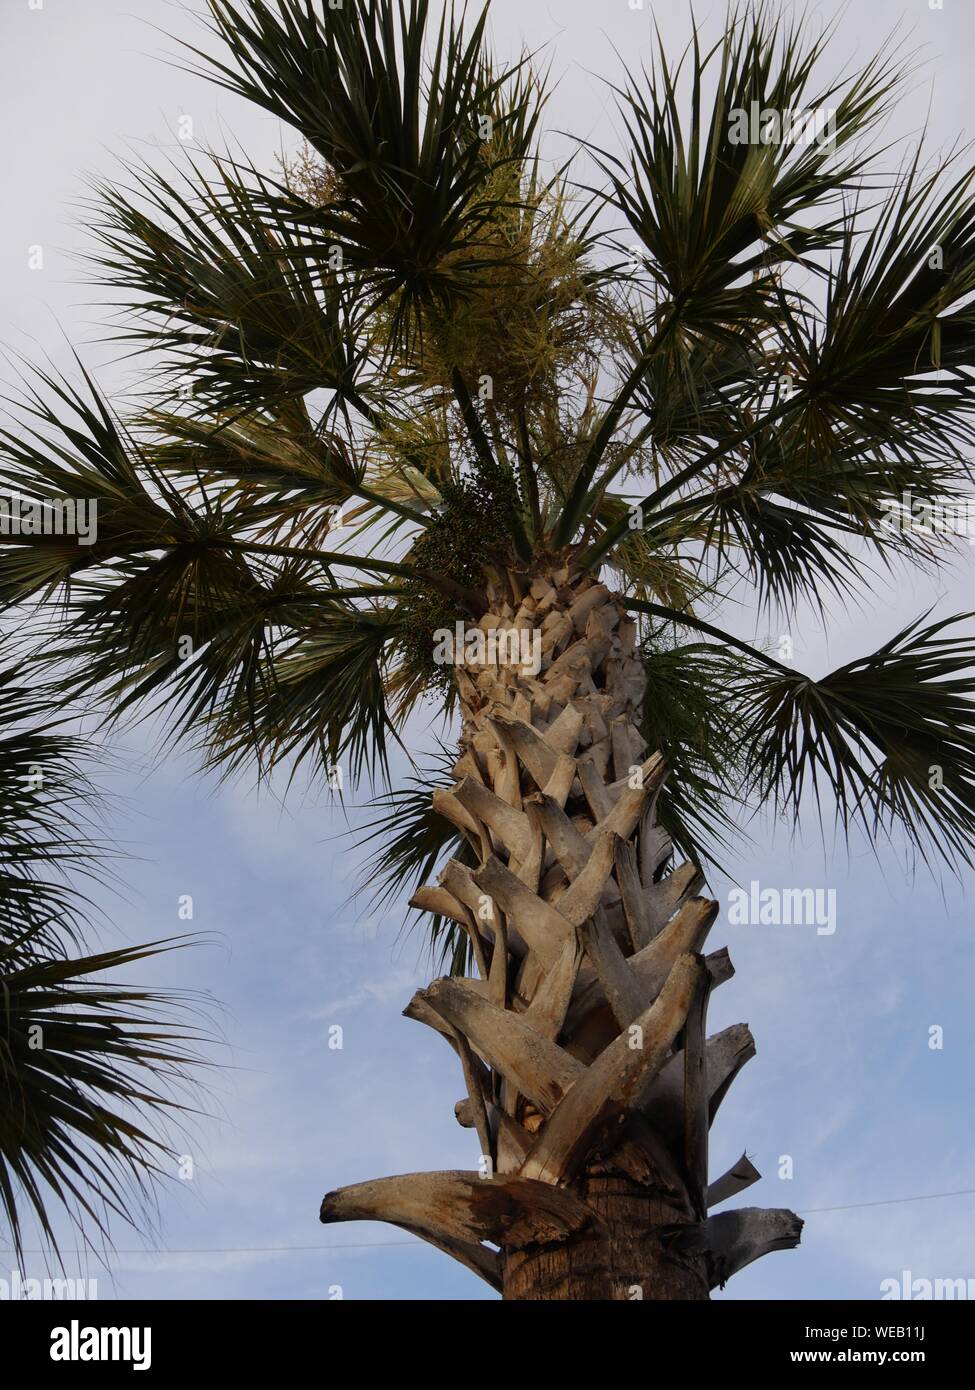 Upward shot of a palm tree, portrait view Stock Photo